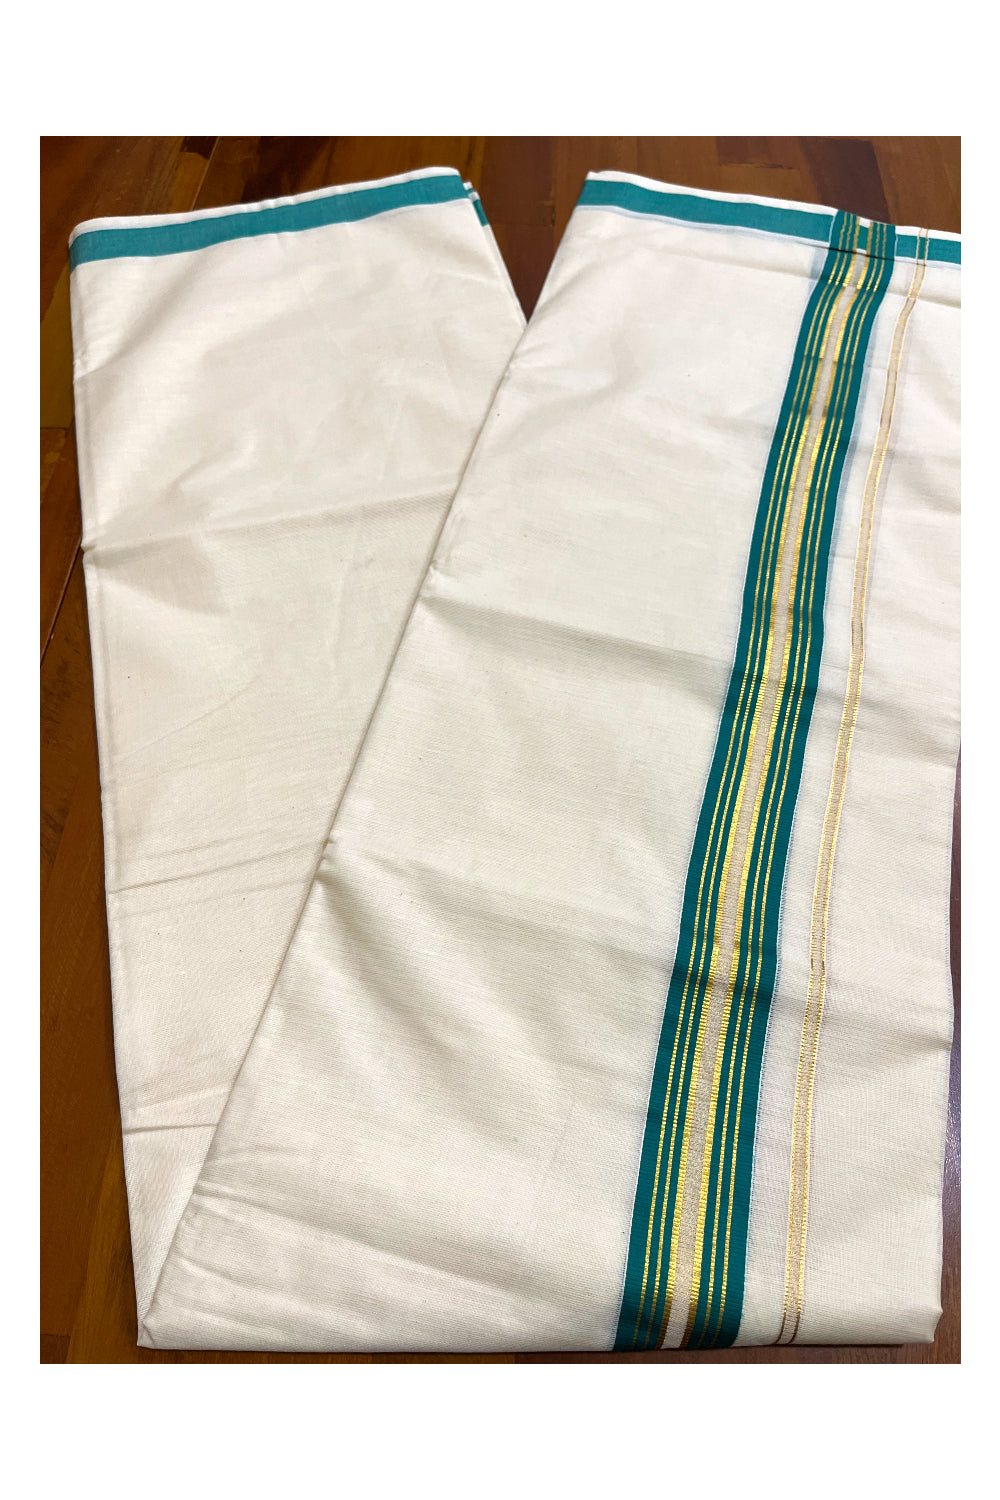 Kerala Pure Cotton Double Mundu with Green and Kasavu Lines Border (South Indian Kerala Dhoti)